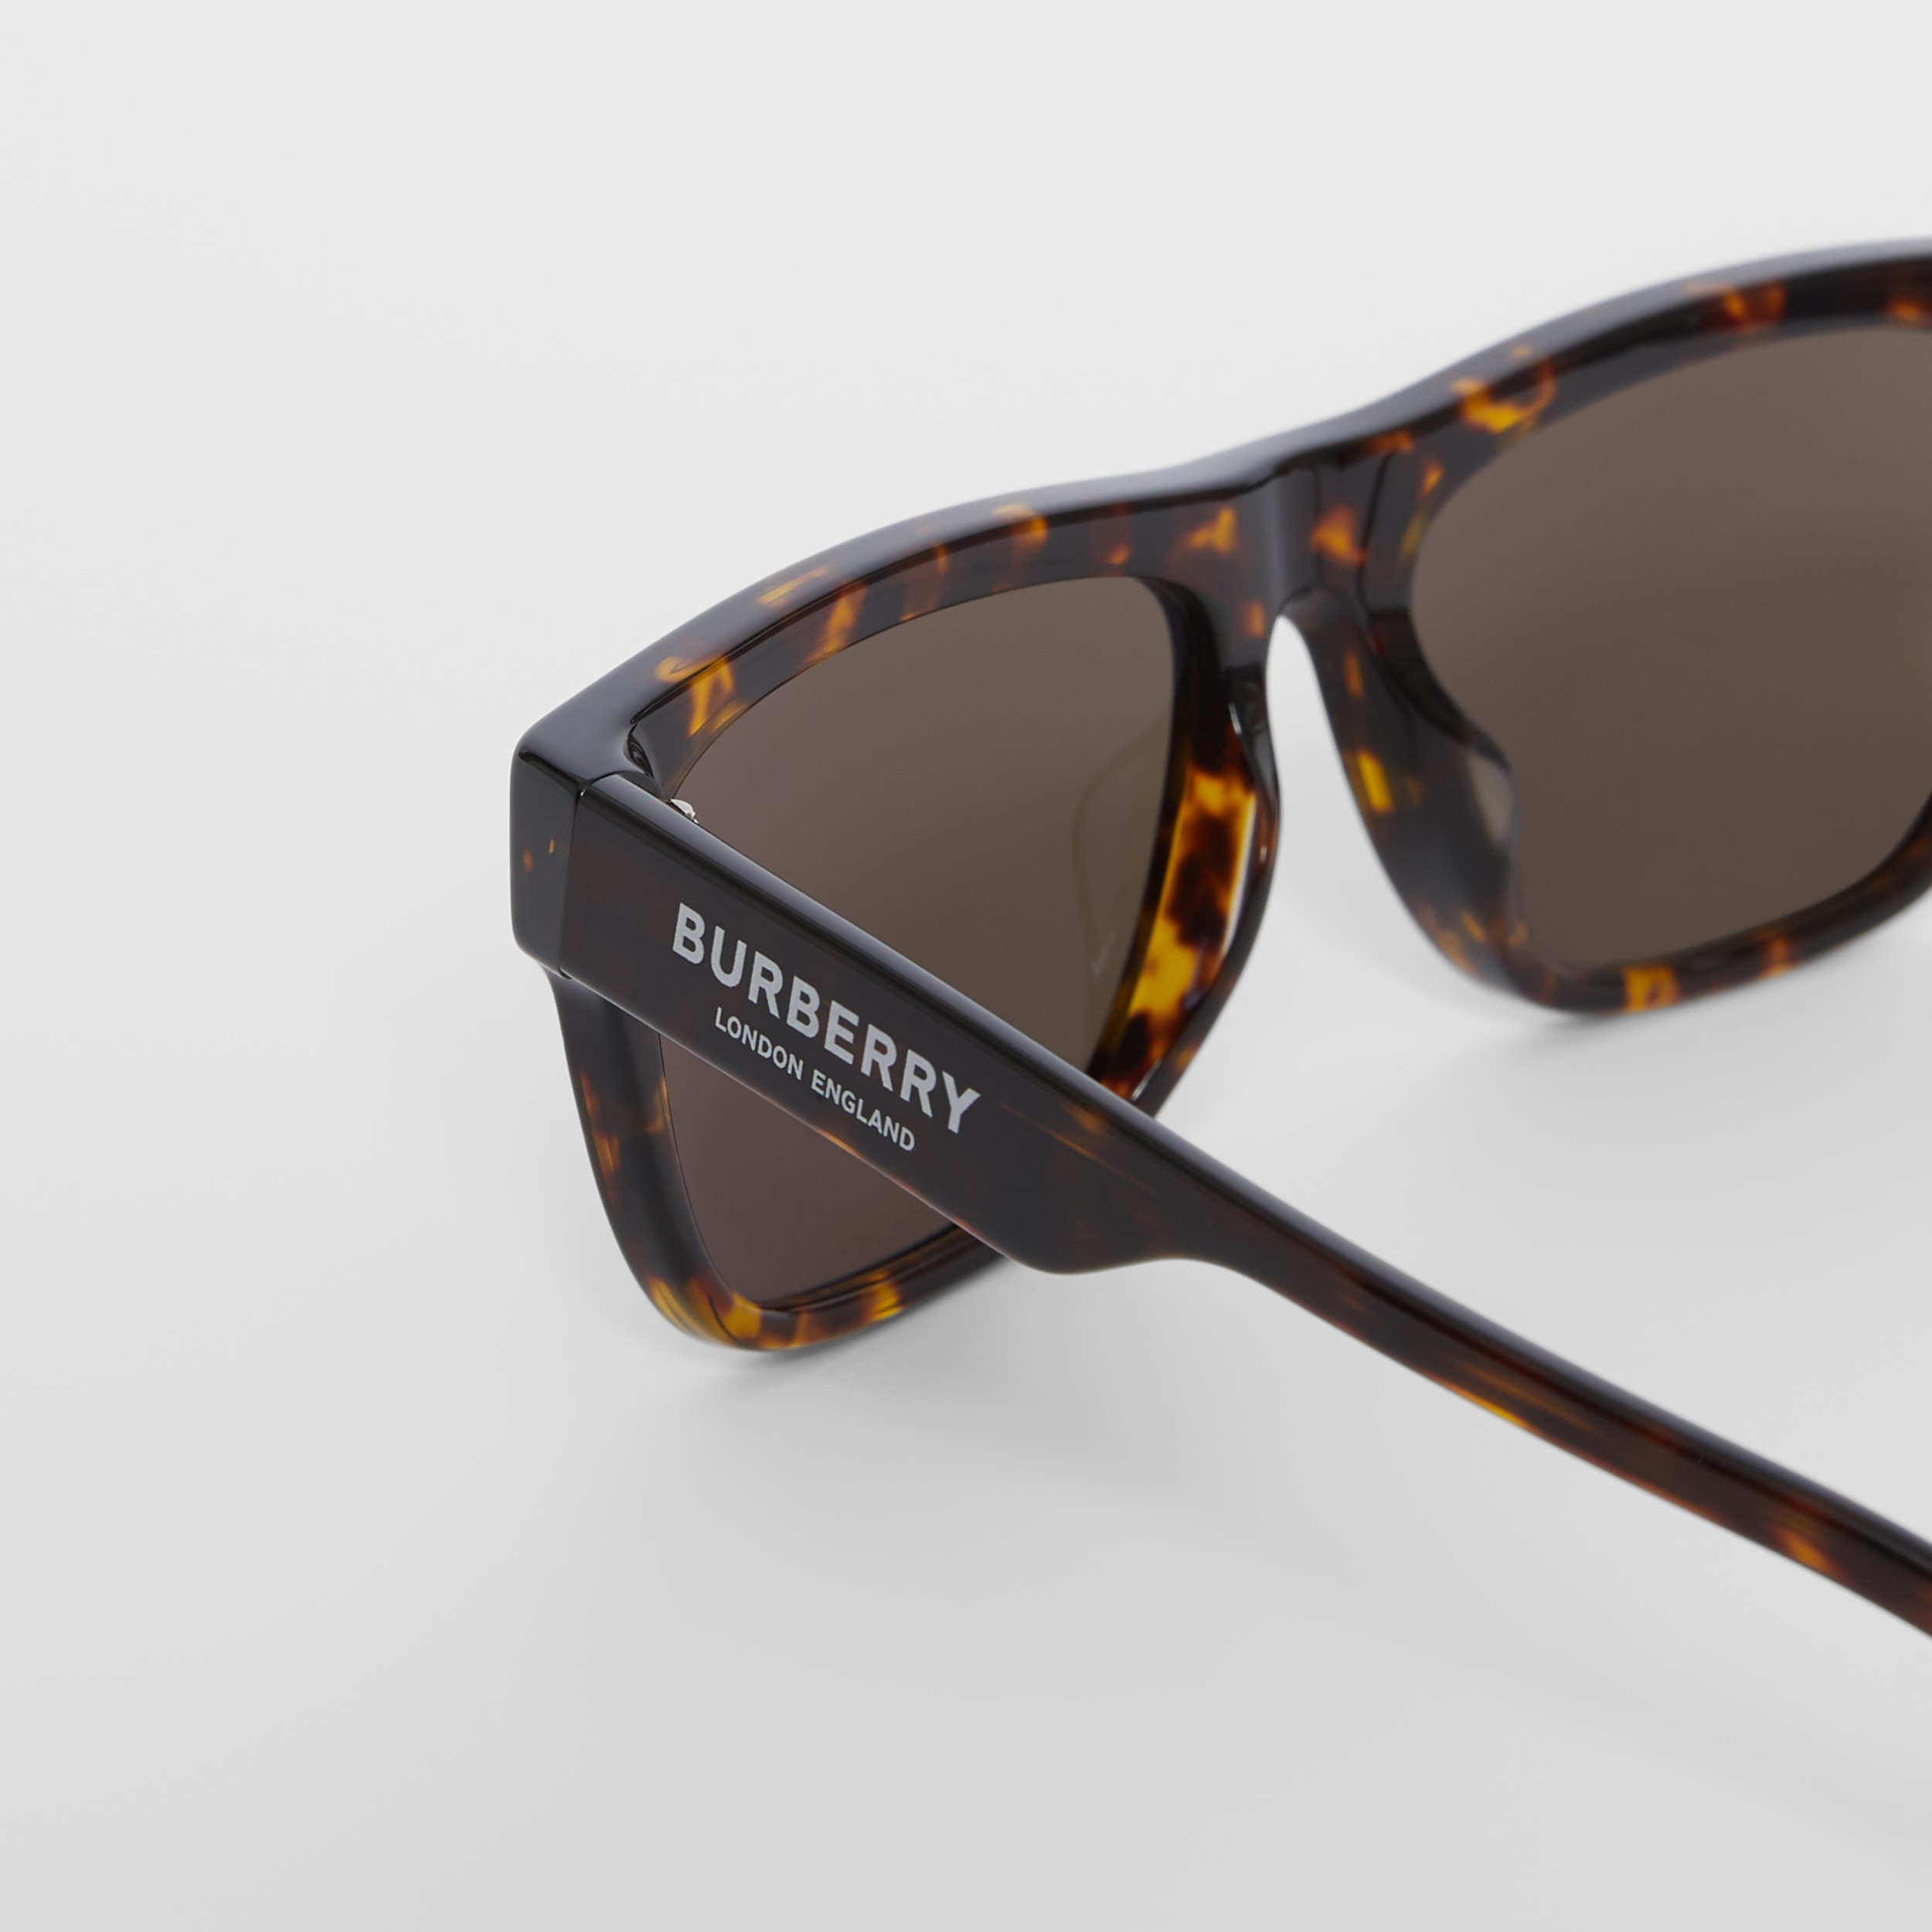 Actualizar 40+ imagen burberry london sunglasses